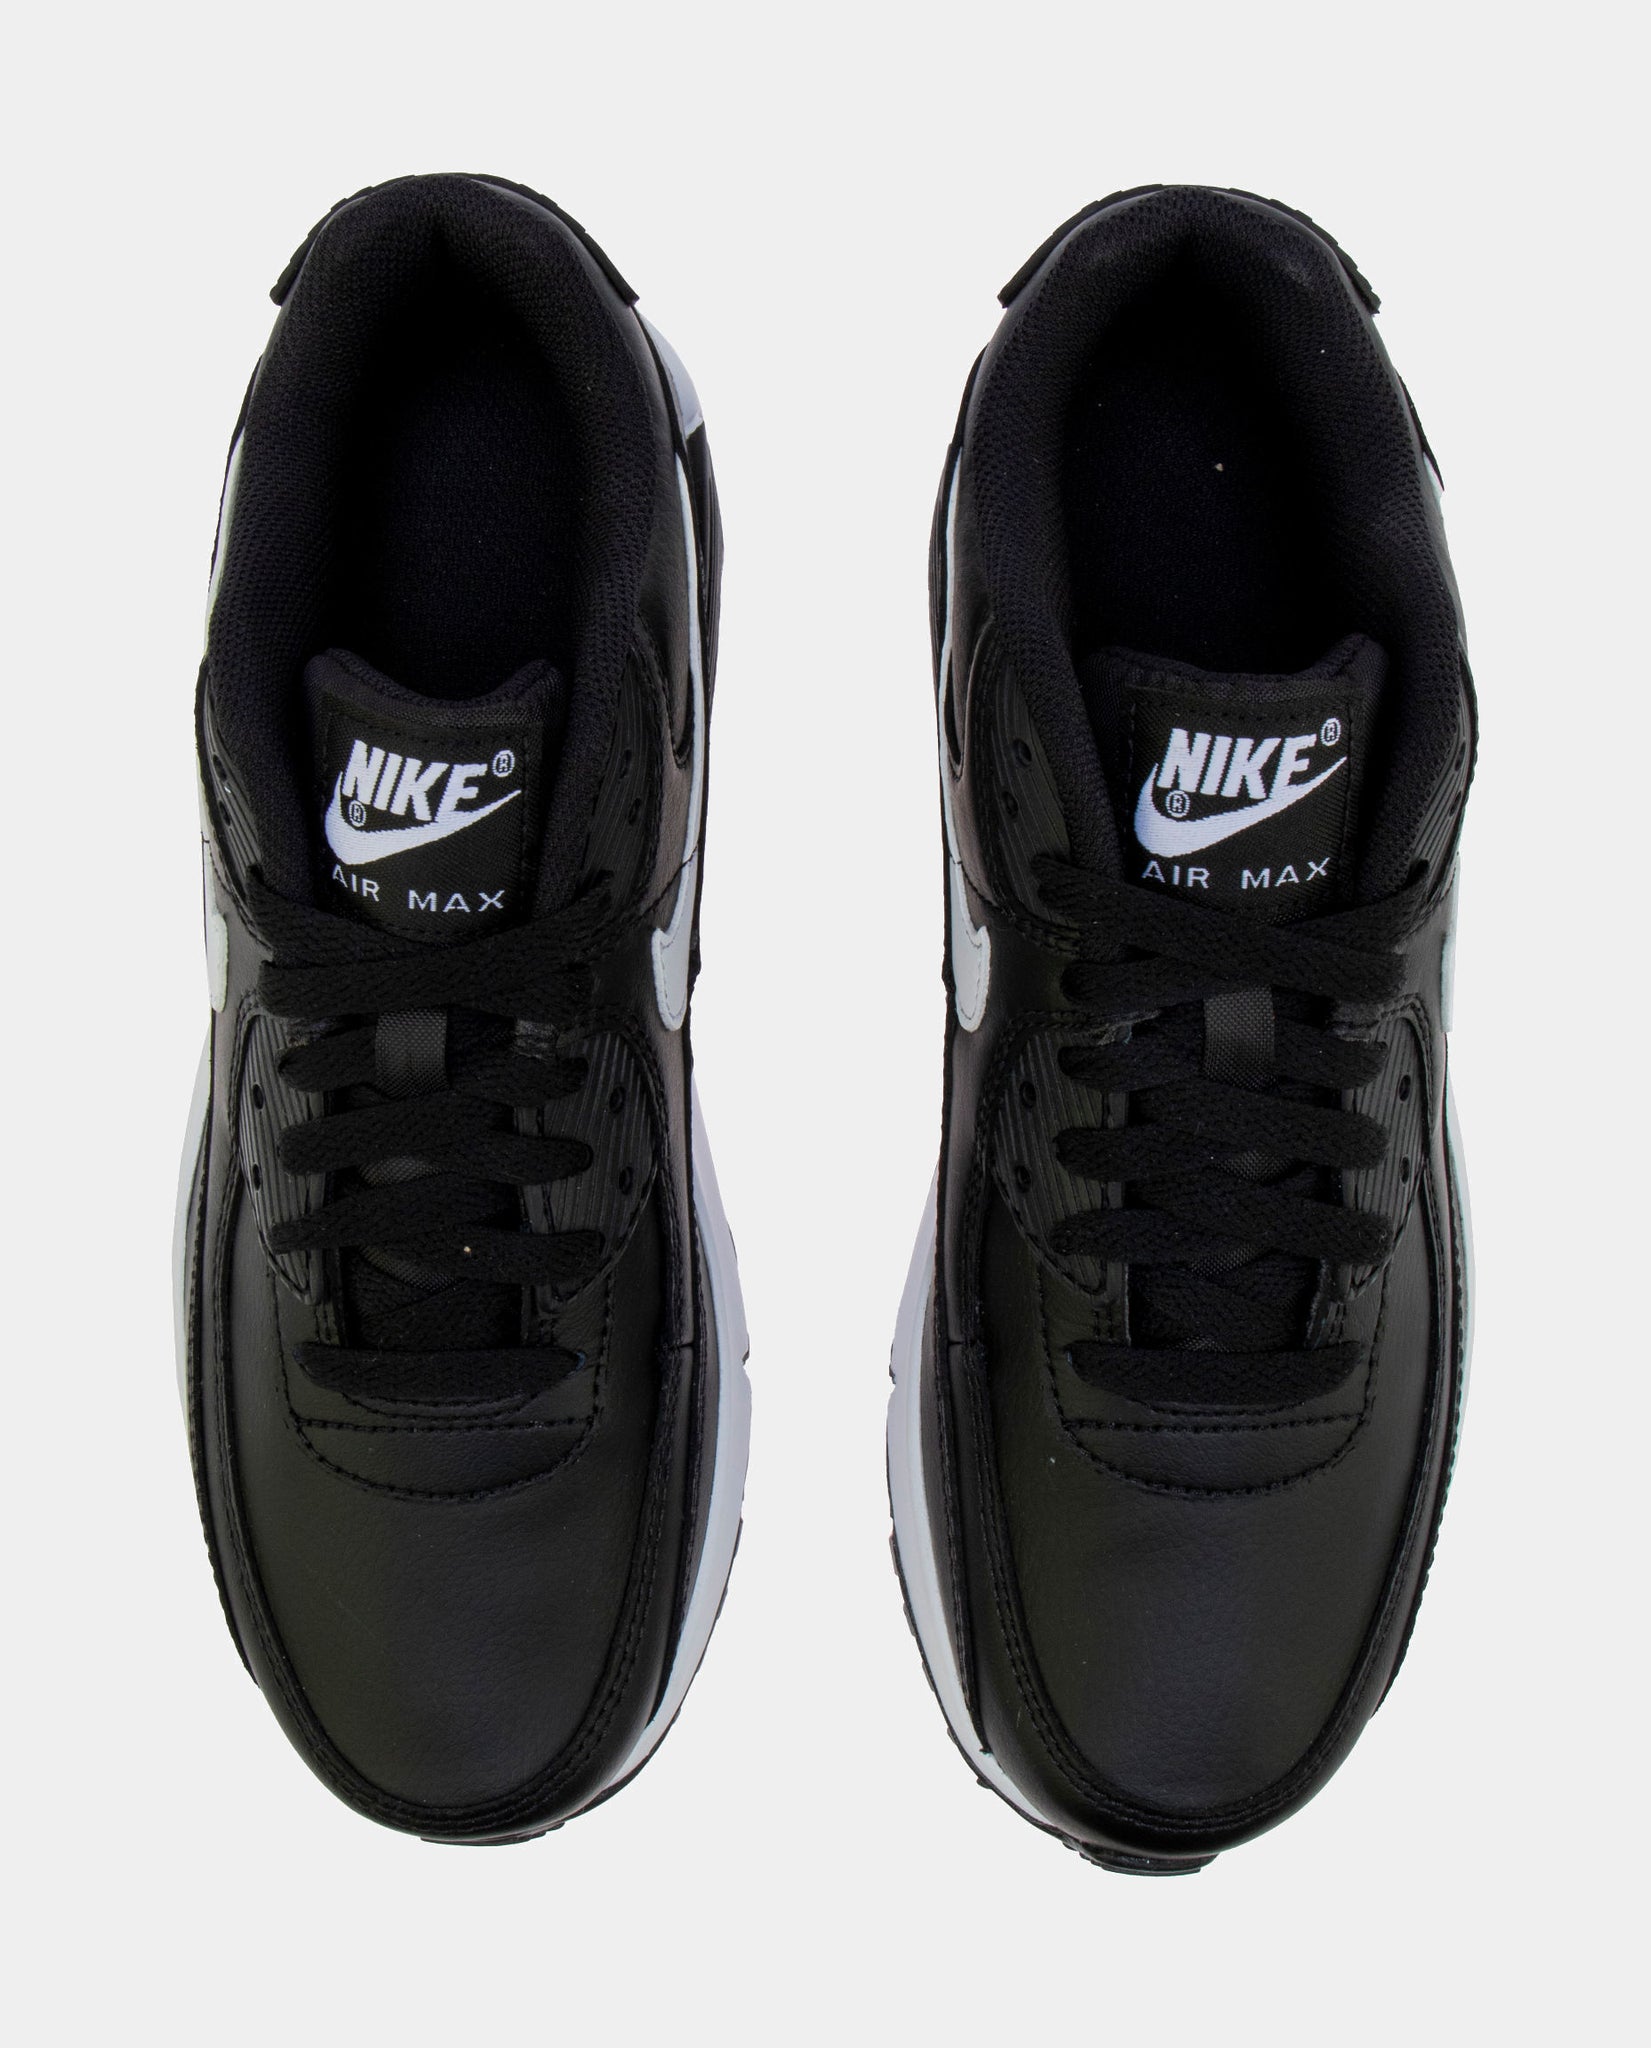 Trafik legetøj edderkop Nike Air Max 90 365 Leather Grade School Running Shoes Black CD6864-010 –  Shoe Palace